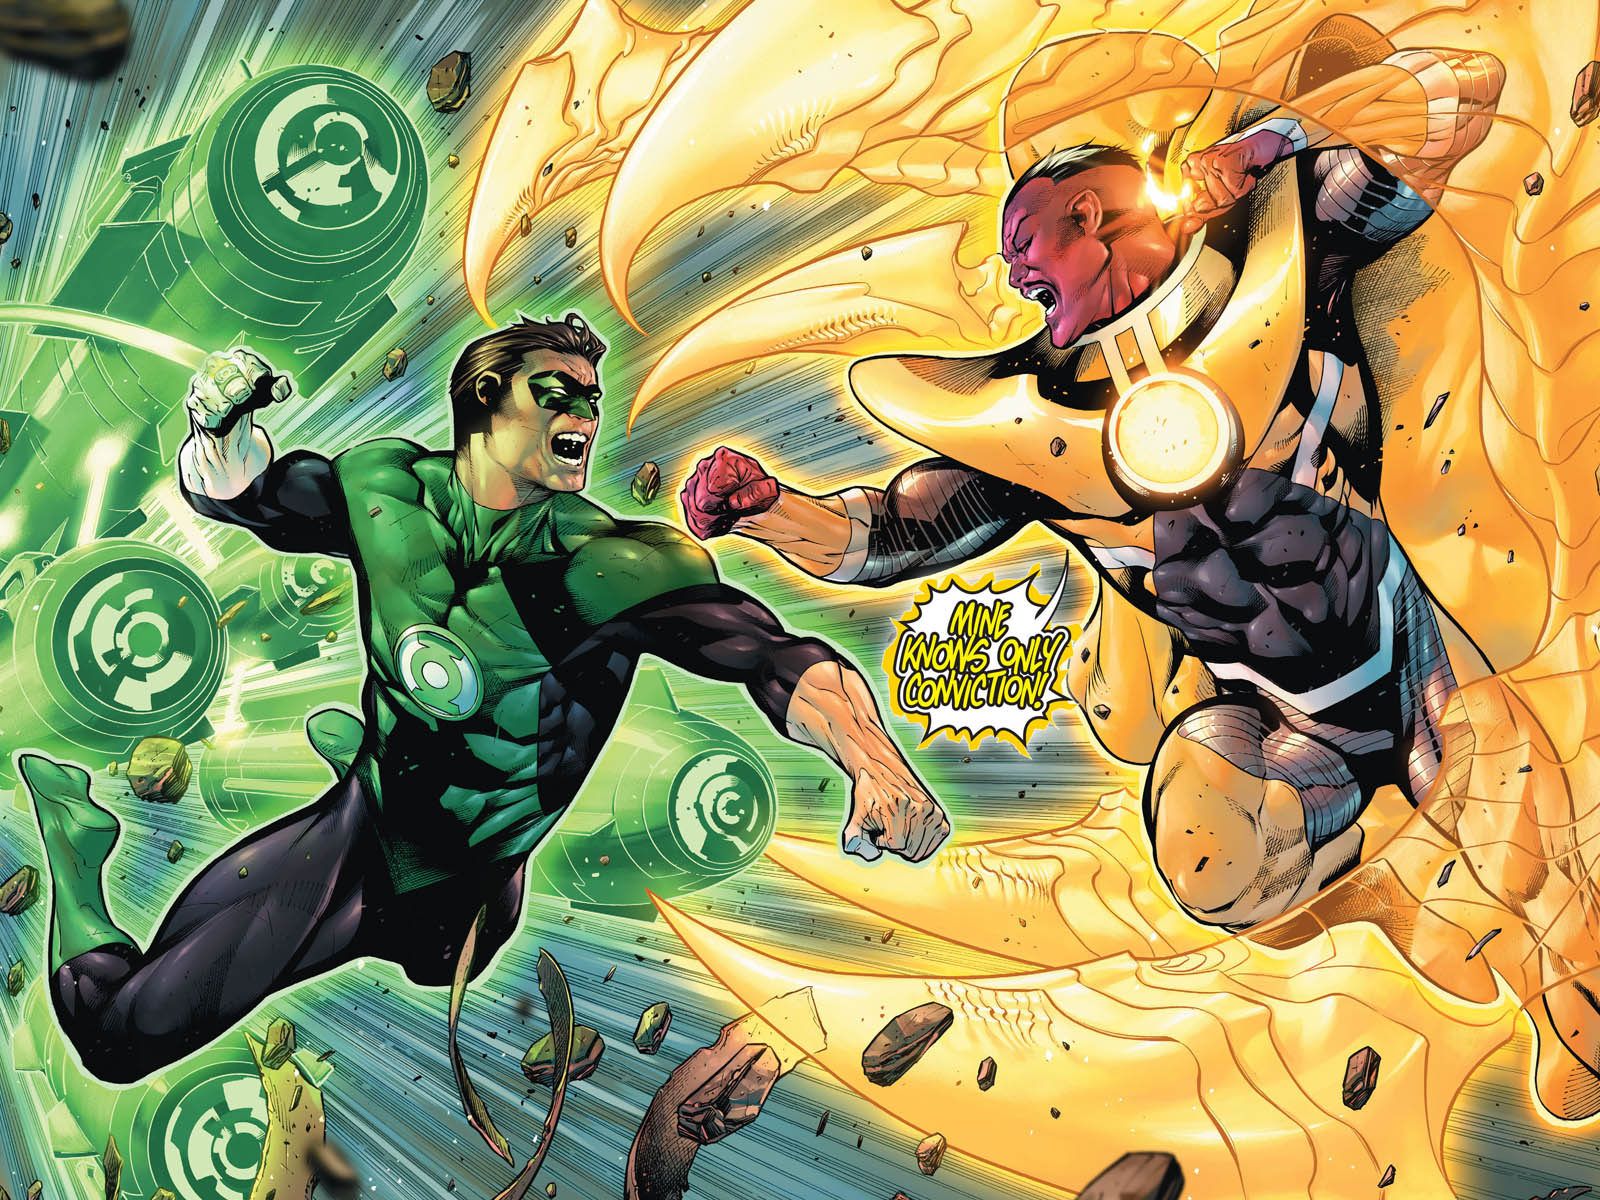 Green Lantern Hal Jordan Vs Sinestro Rebirth Desktop HD Wallpaper For Mobile Phones And Computer 1920x1200, Wallpaper13.com